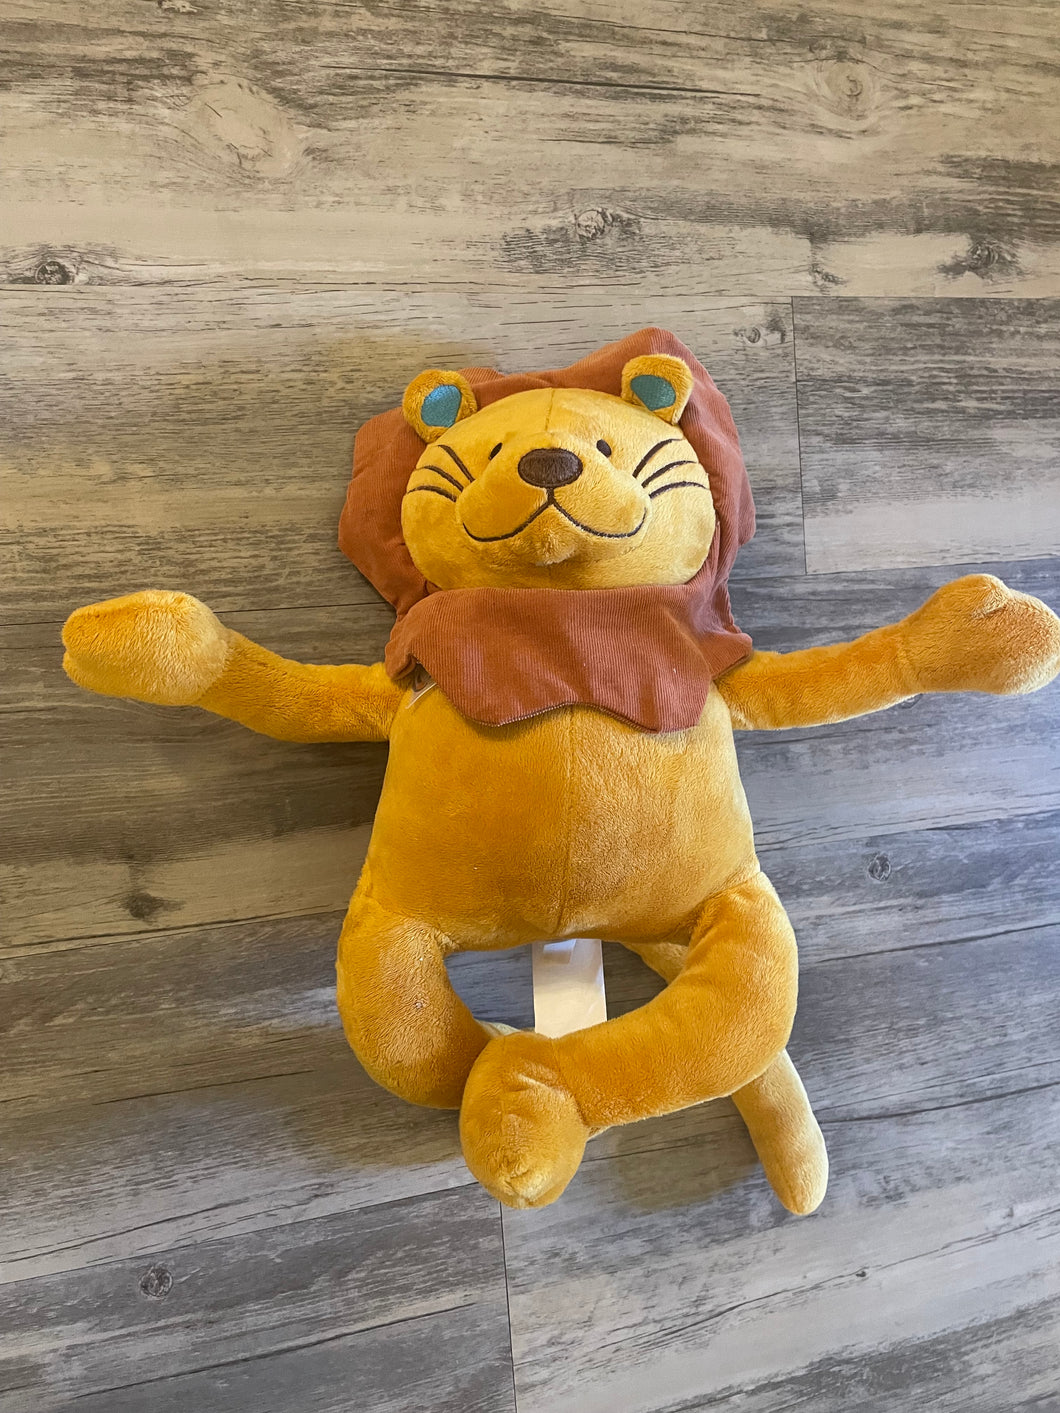 Lion stuffed animal approx 12